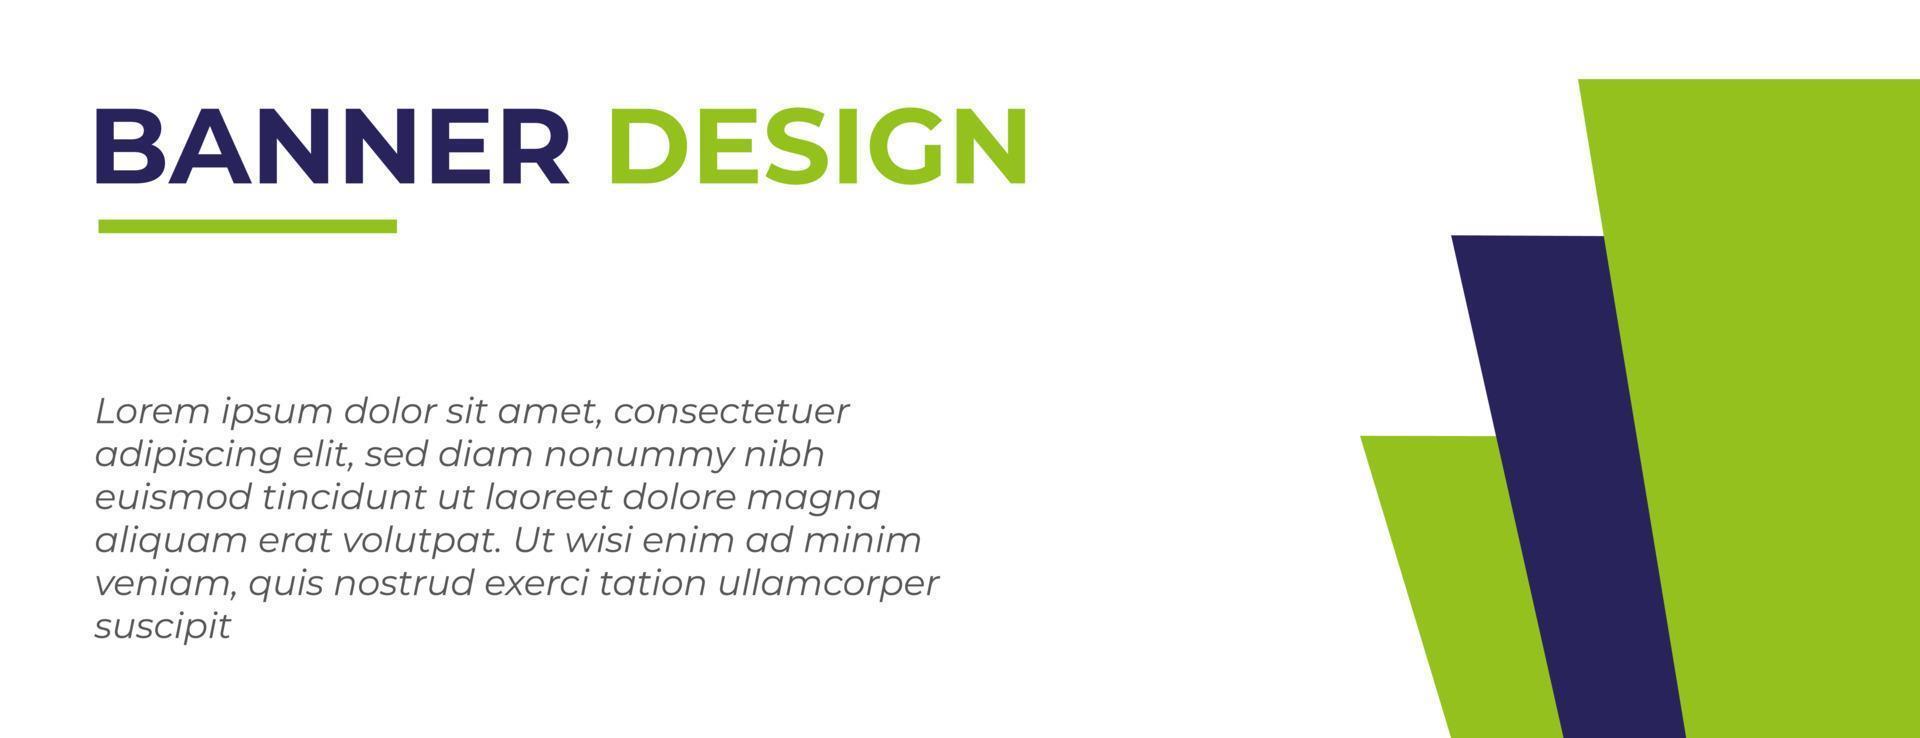 modelo de banner da web. projeto da bandeira com a cor verde. estilo limpo e moderno vetor